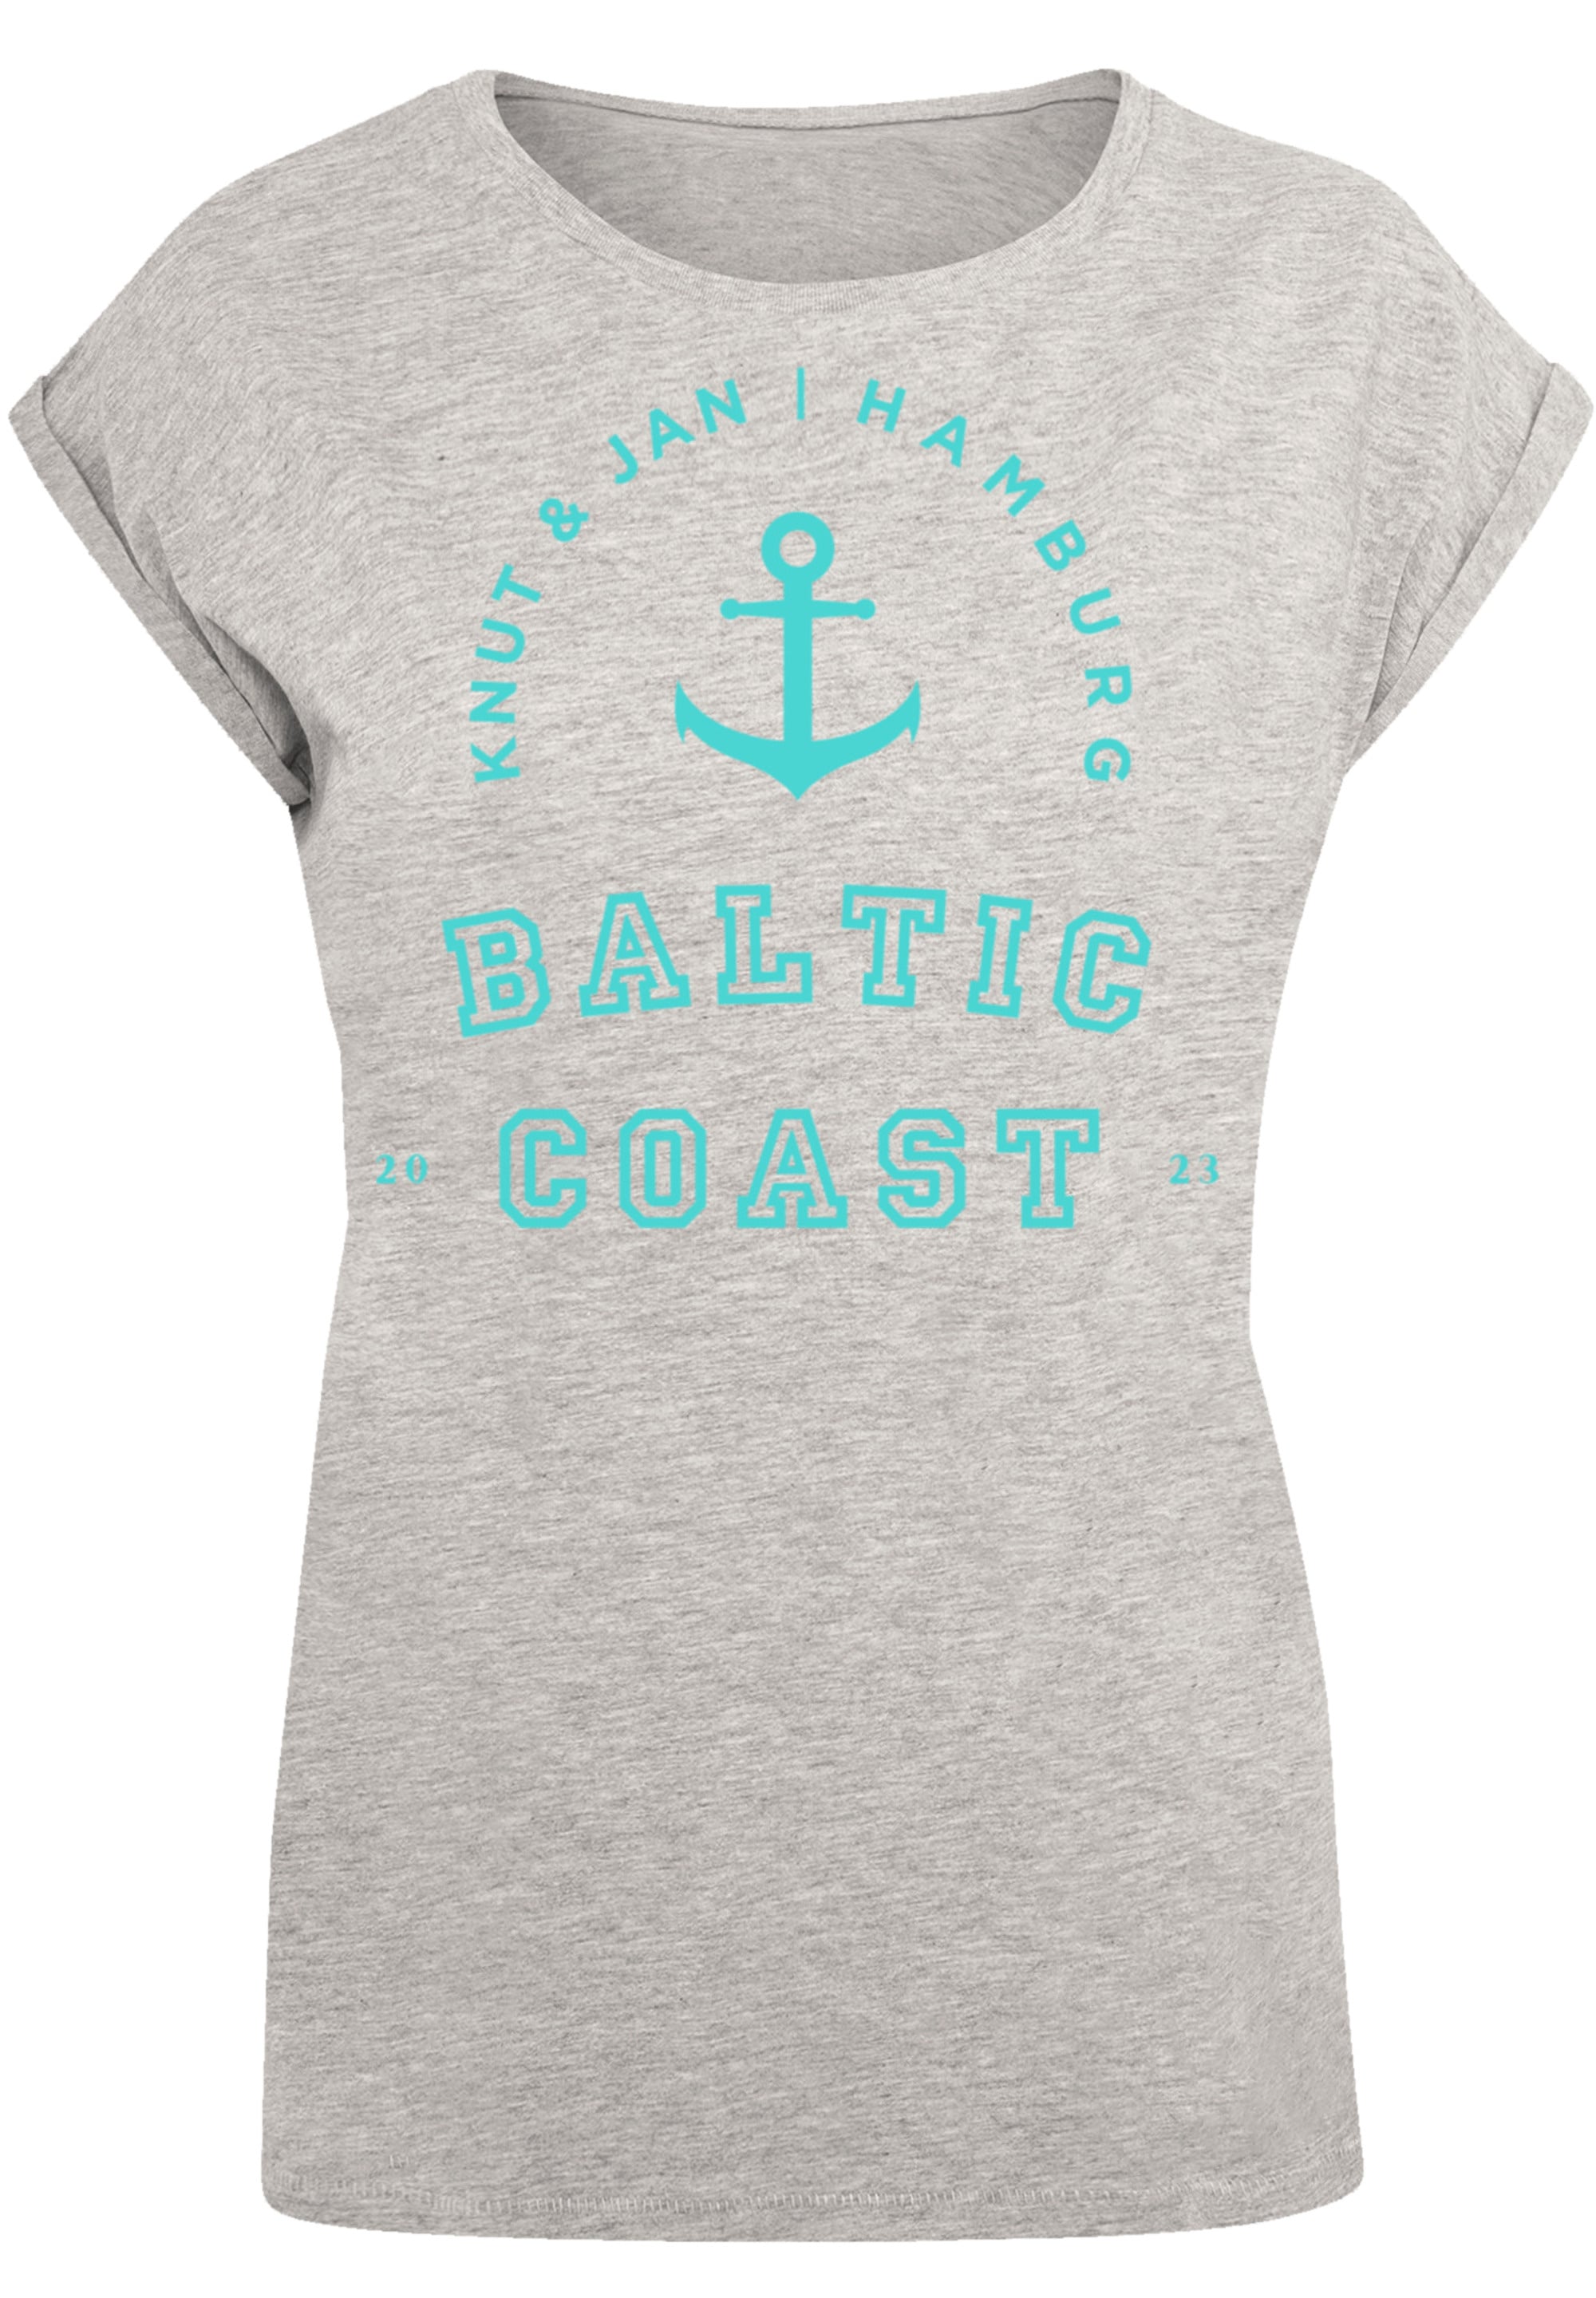 Print SIZE I\'m »PLUS F4NT4STIC online T-Shirt | Baltic Coast«, walking